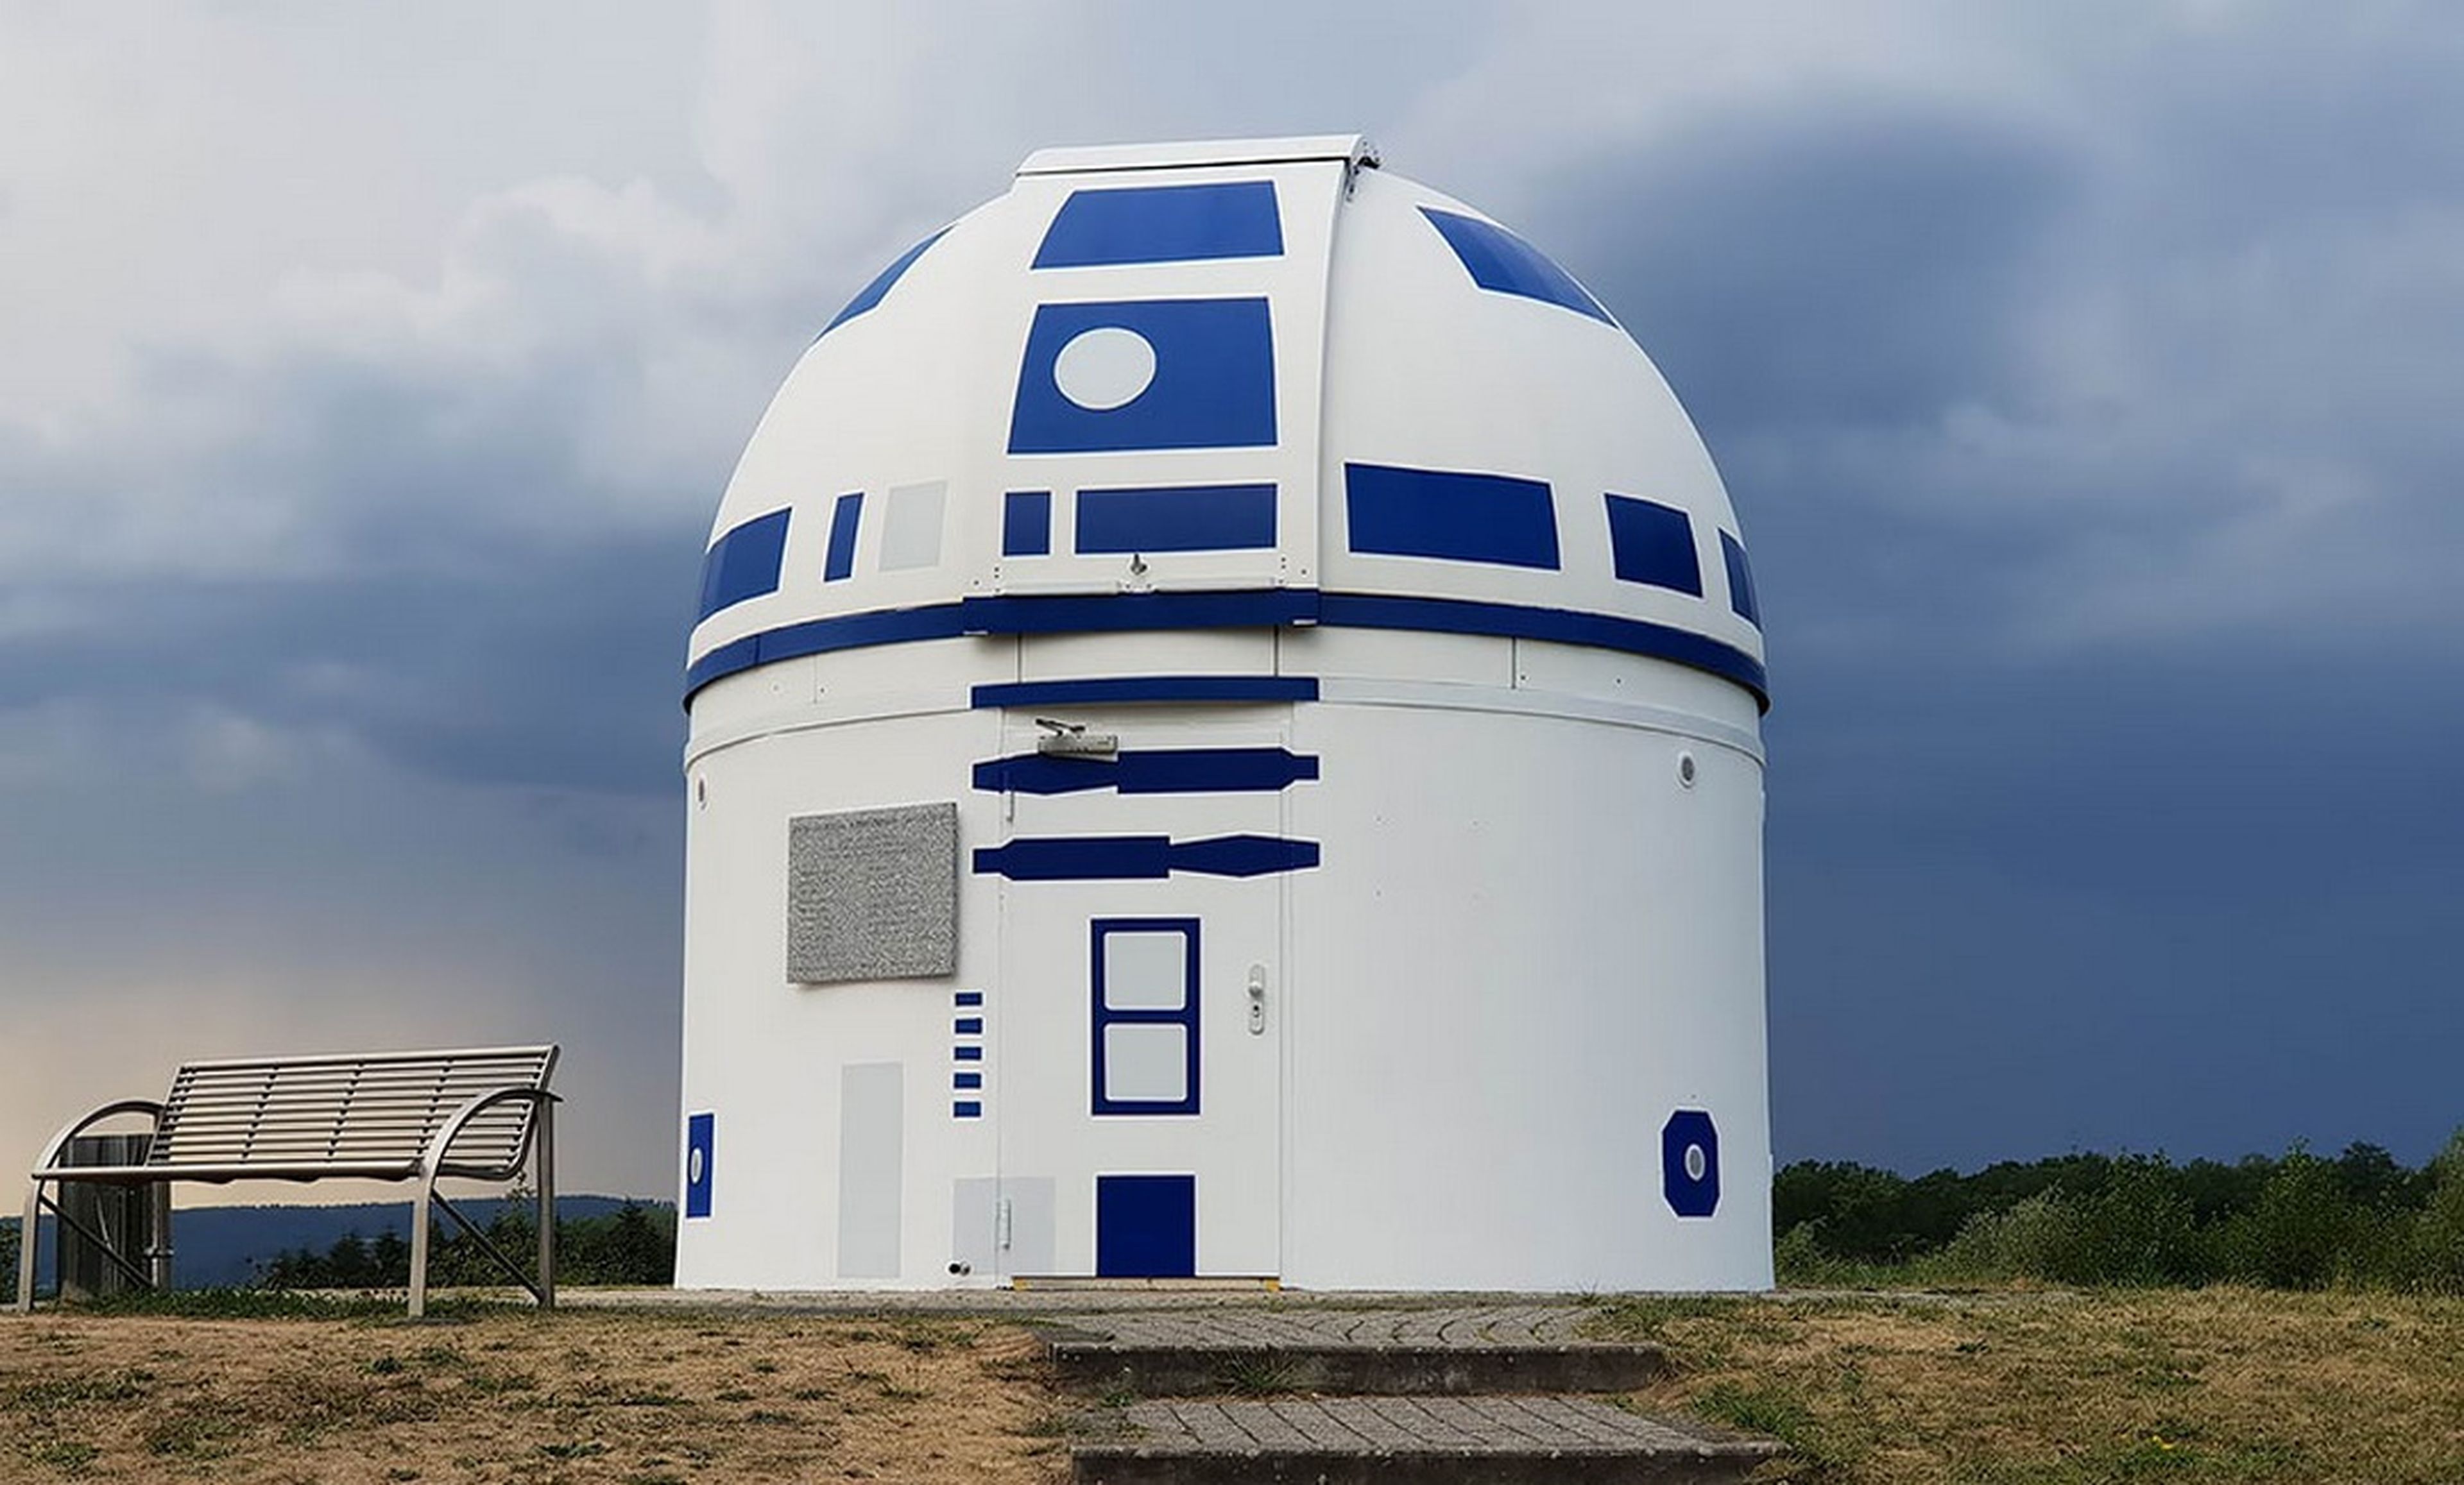 Est inmenso R2-D2 es un observatorio espacial